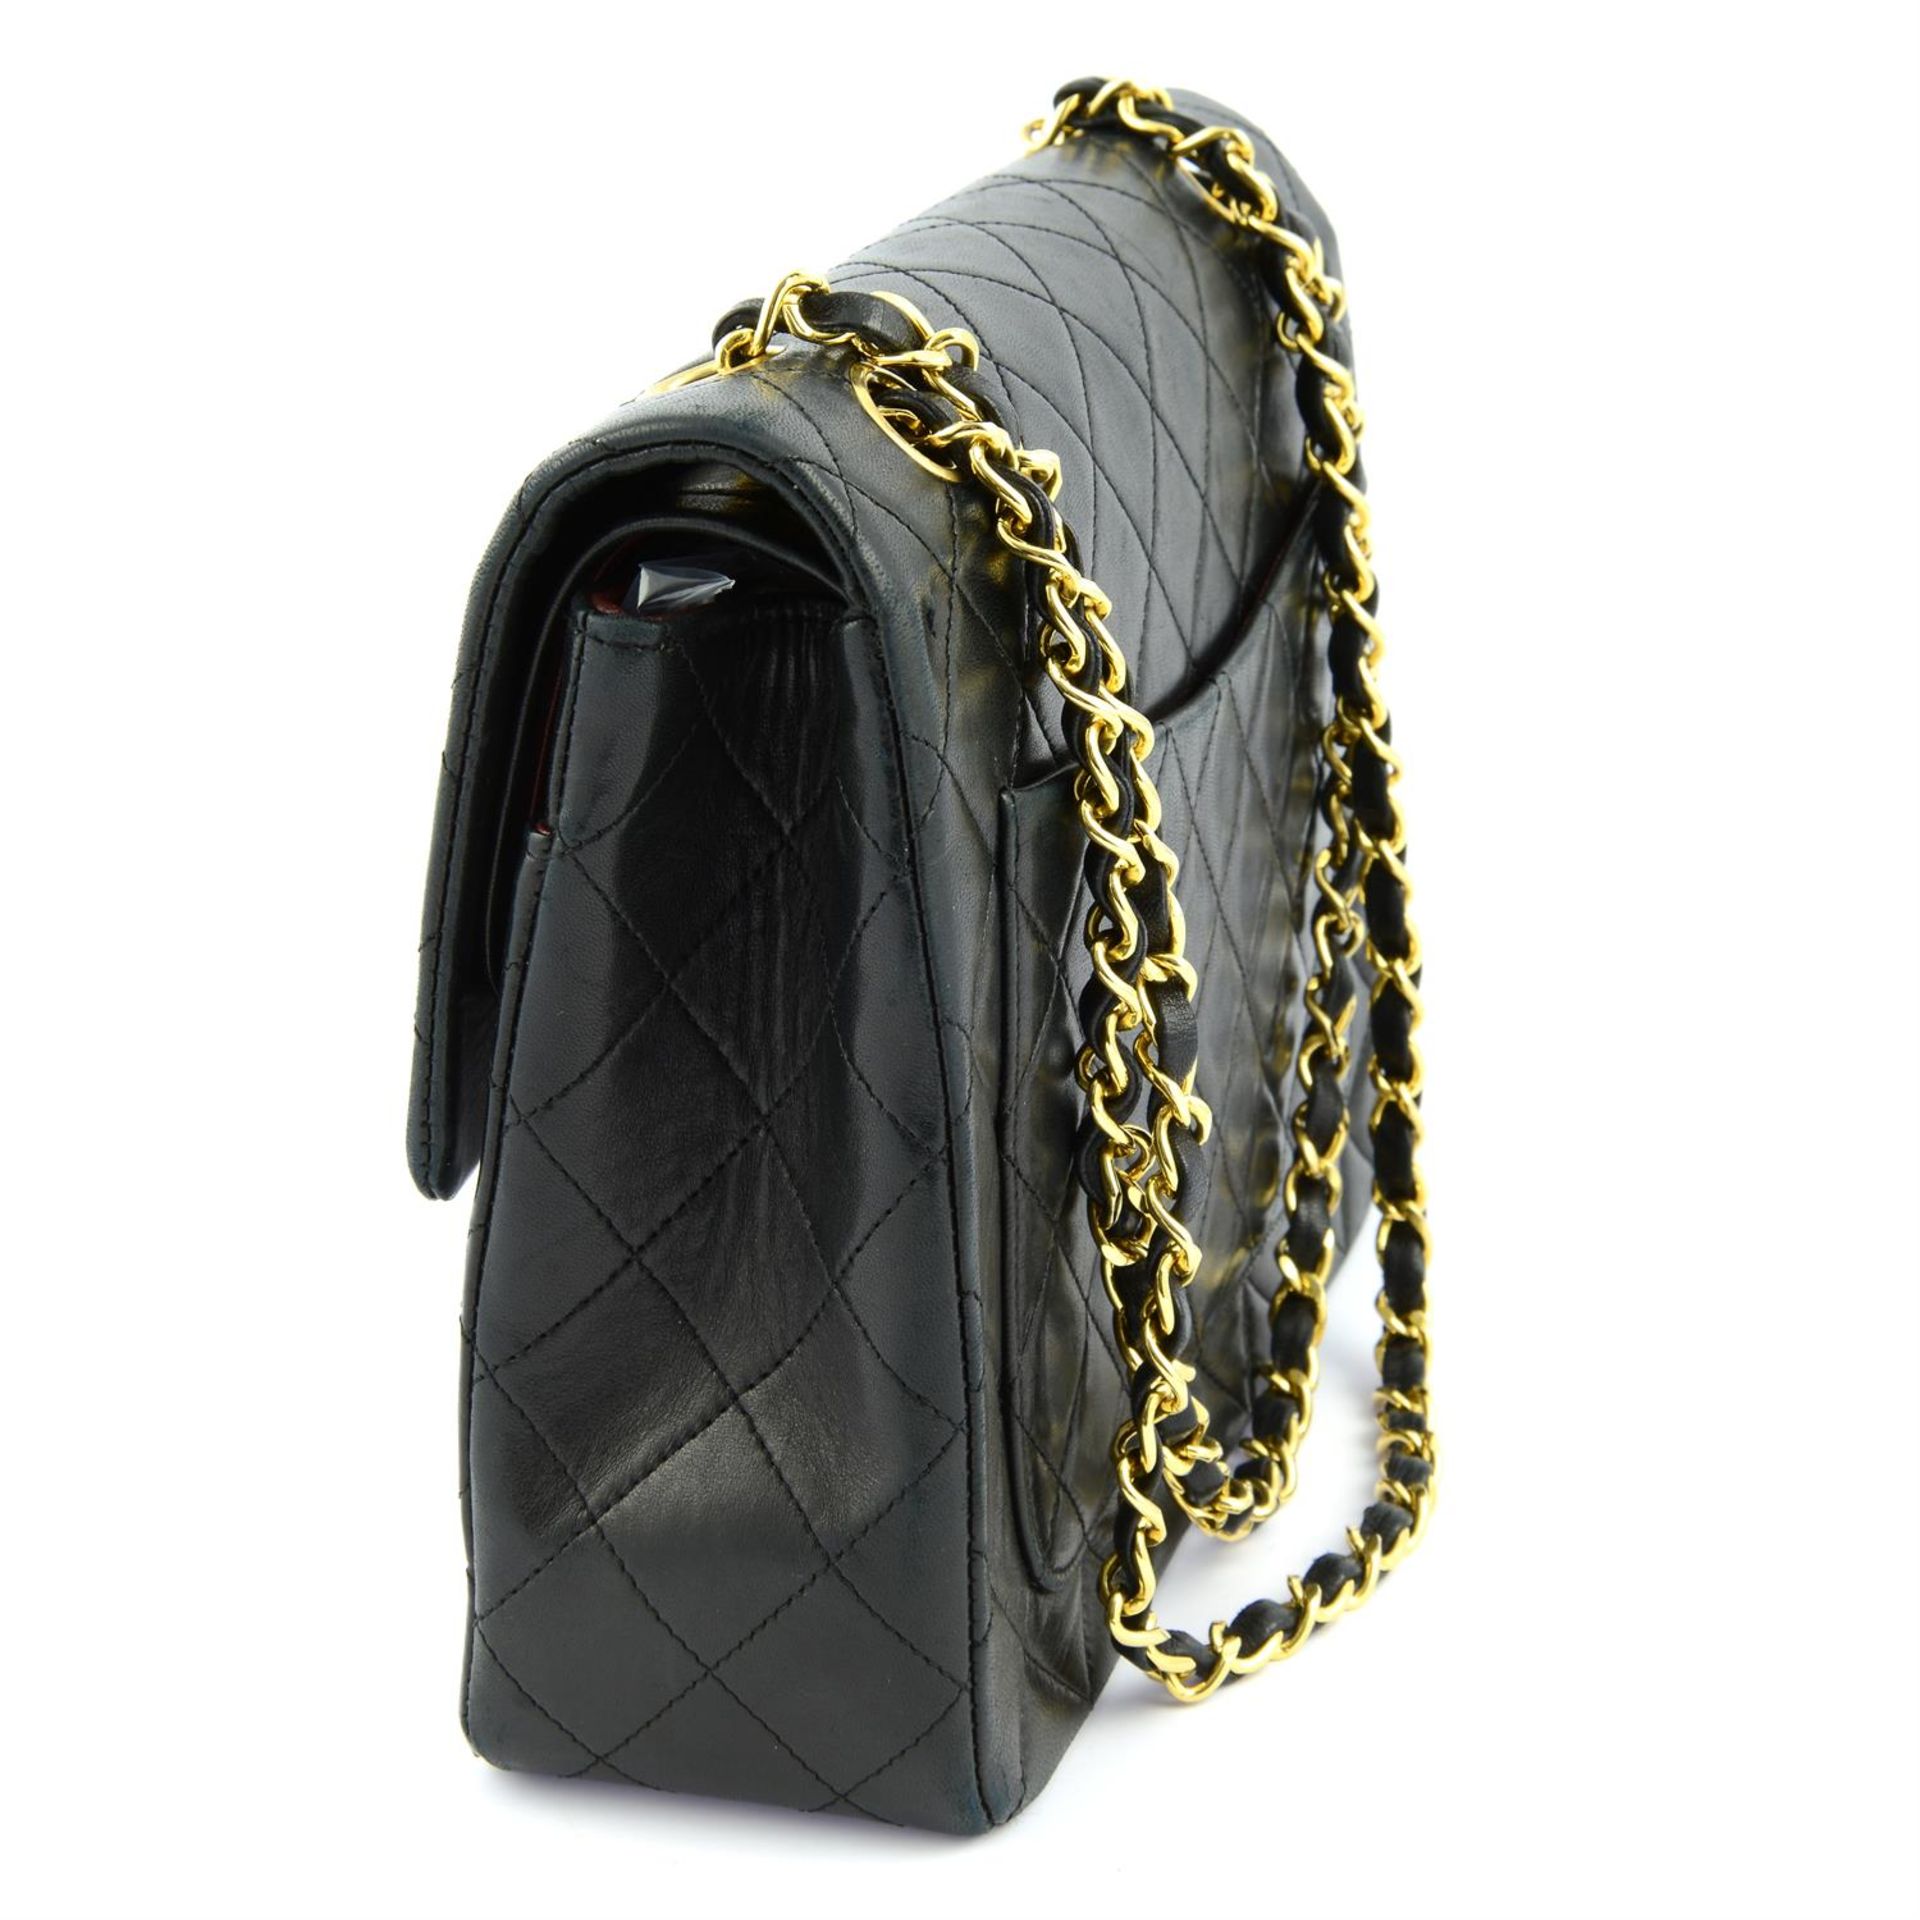 CHANEL - a circa 1990 black Double Flap handbag. - Image 3 of 4